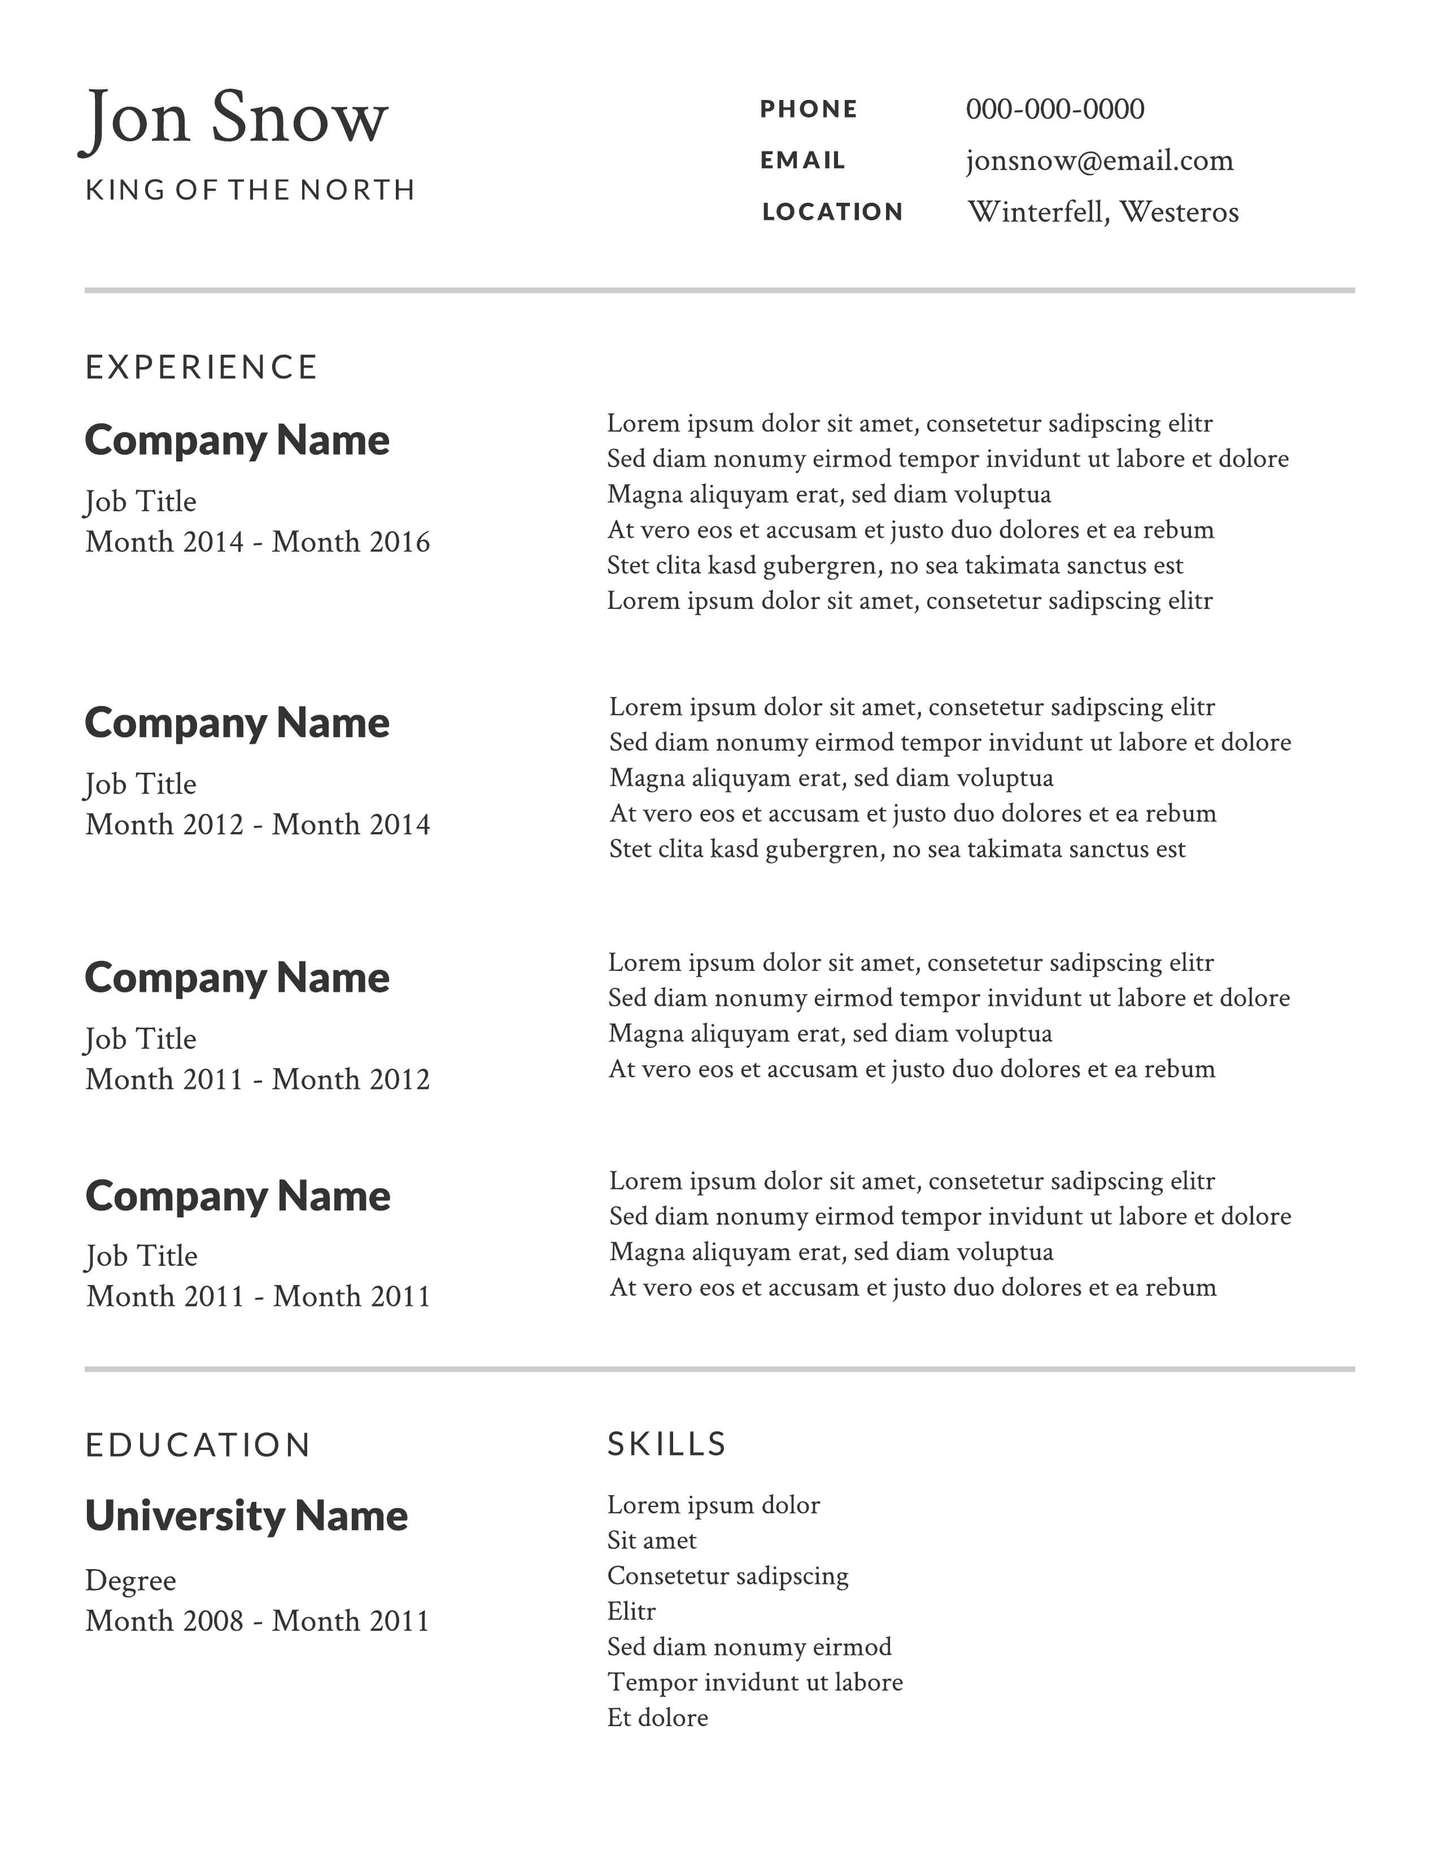 Resume Template Free Resume Professional2x resume template free|wikiresume.com